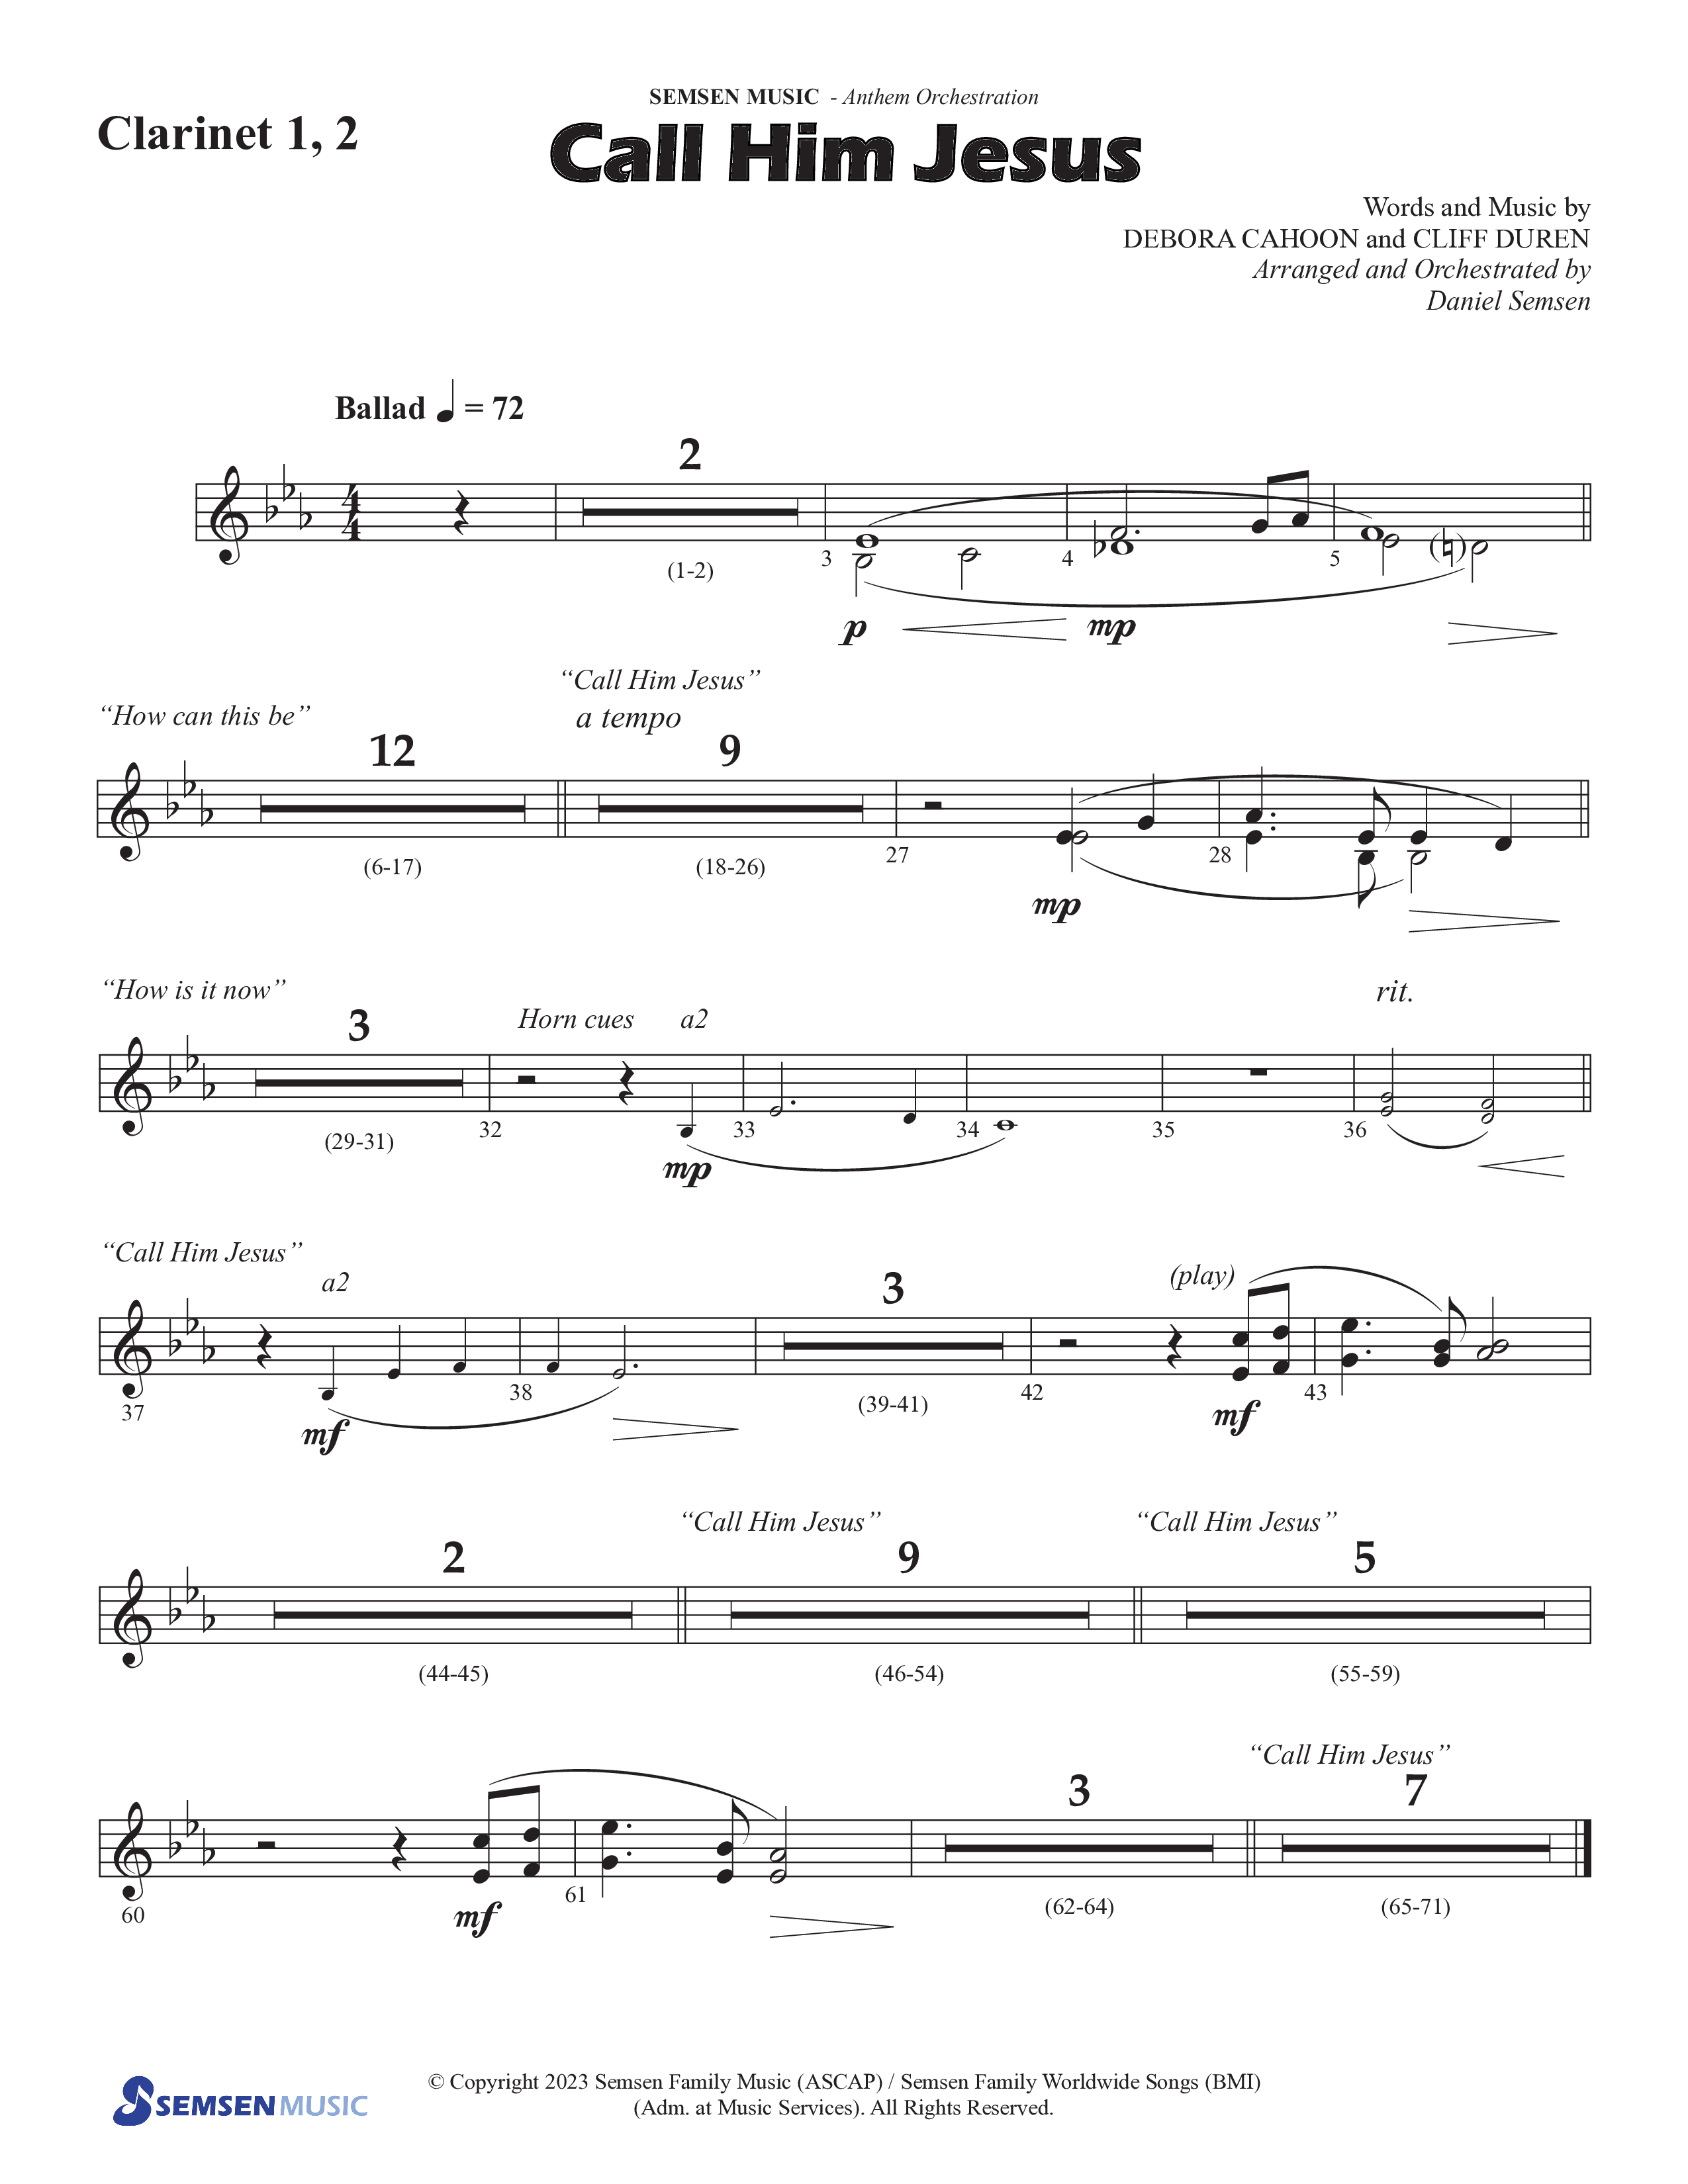 Call Him Jesus (Choral Anthem SATB) Clarinet 1/2 (Semsen Music / Arr. Daniel Semsen)